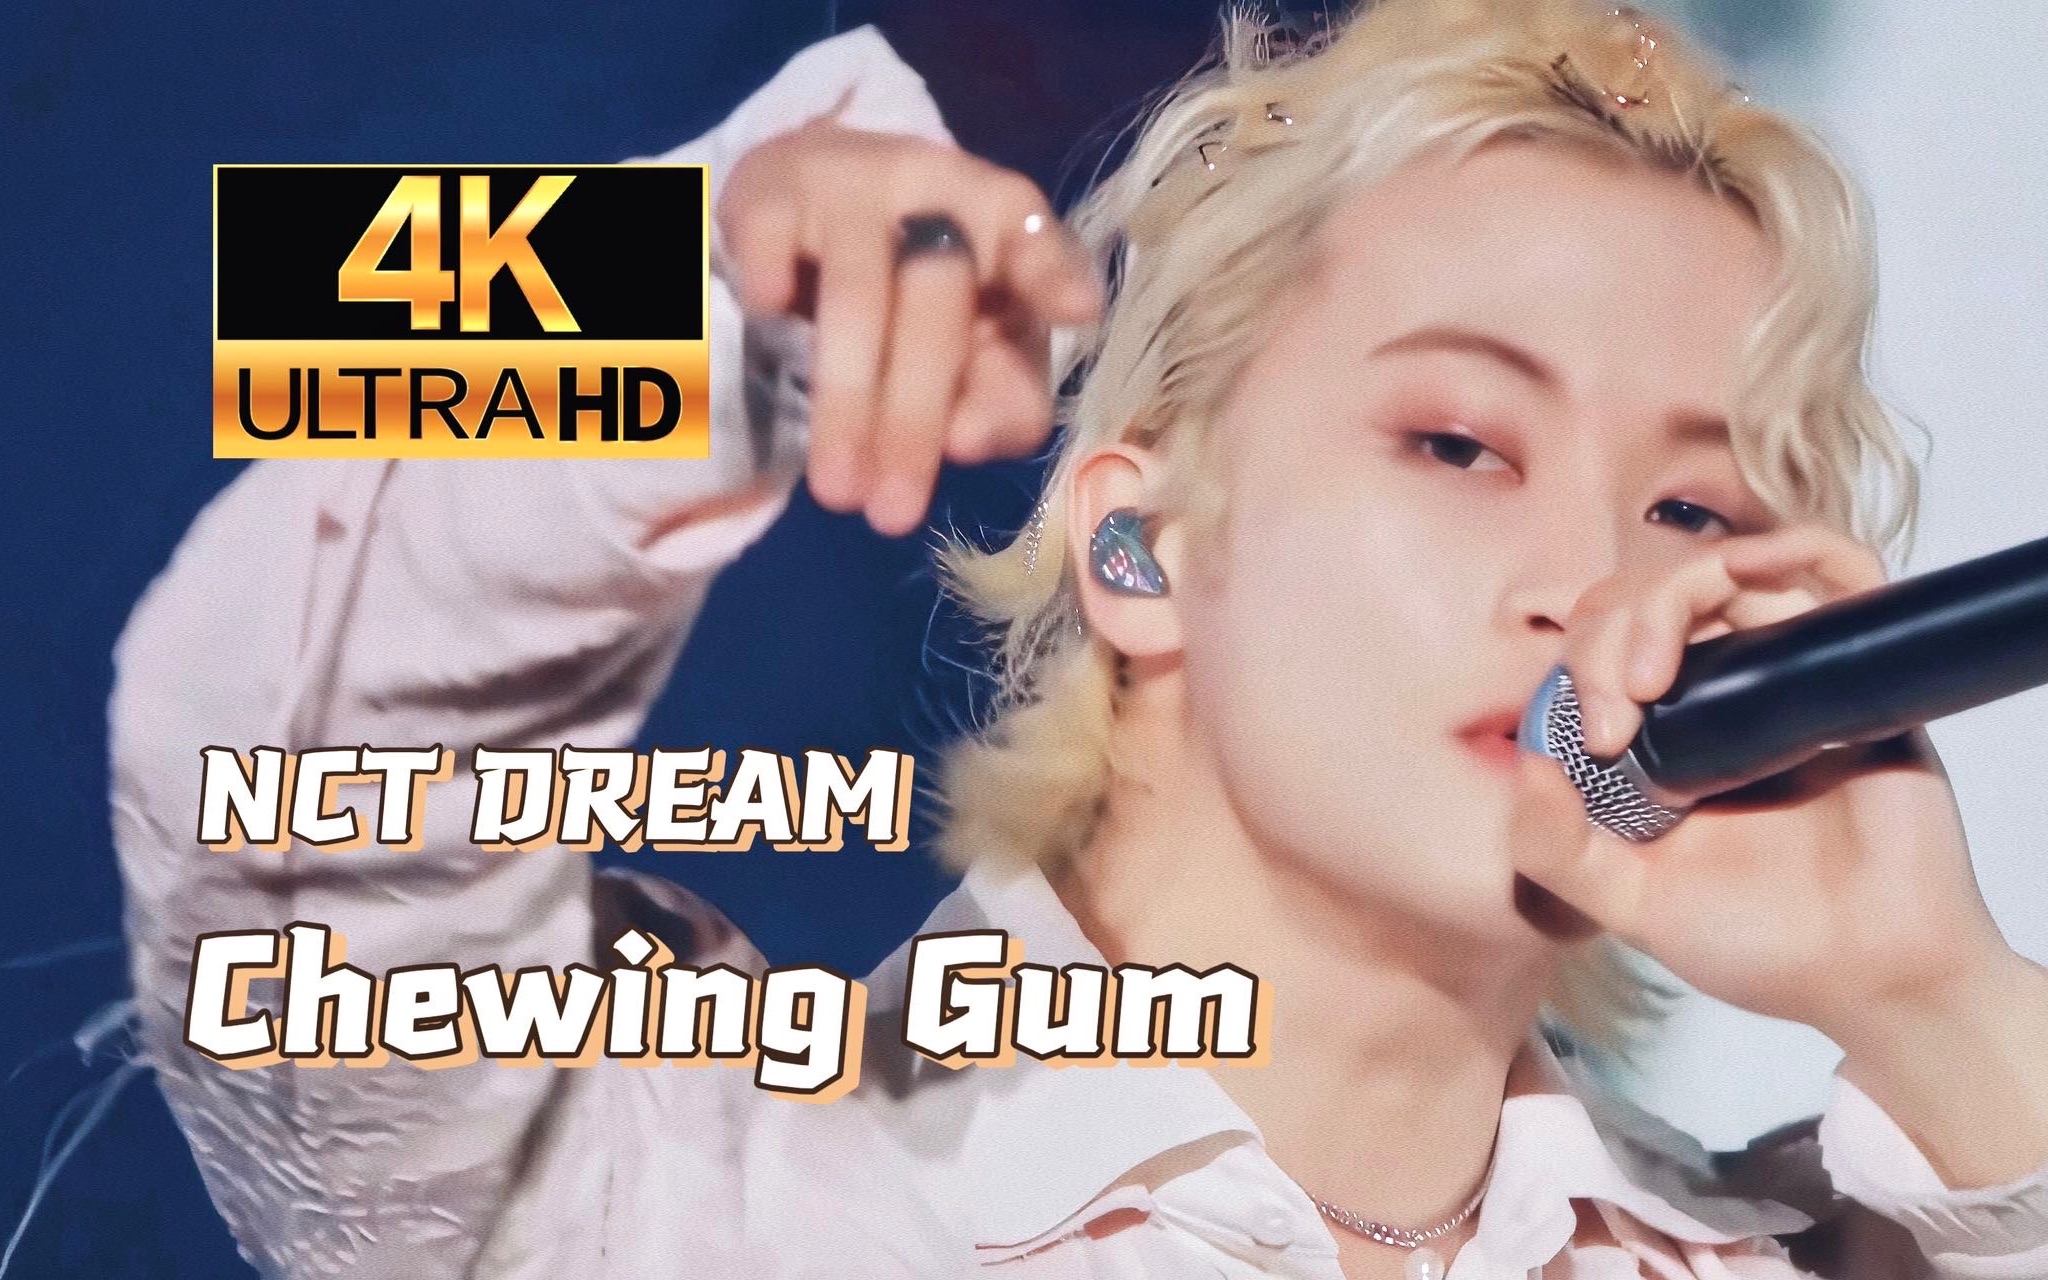 【4K画质修复】成年版的泡泡糖有点拽哦 Chewing Gum - NCT DREAM